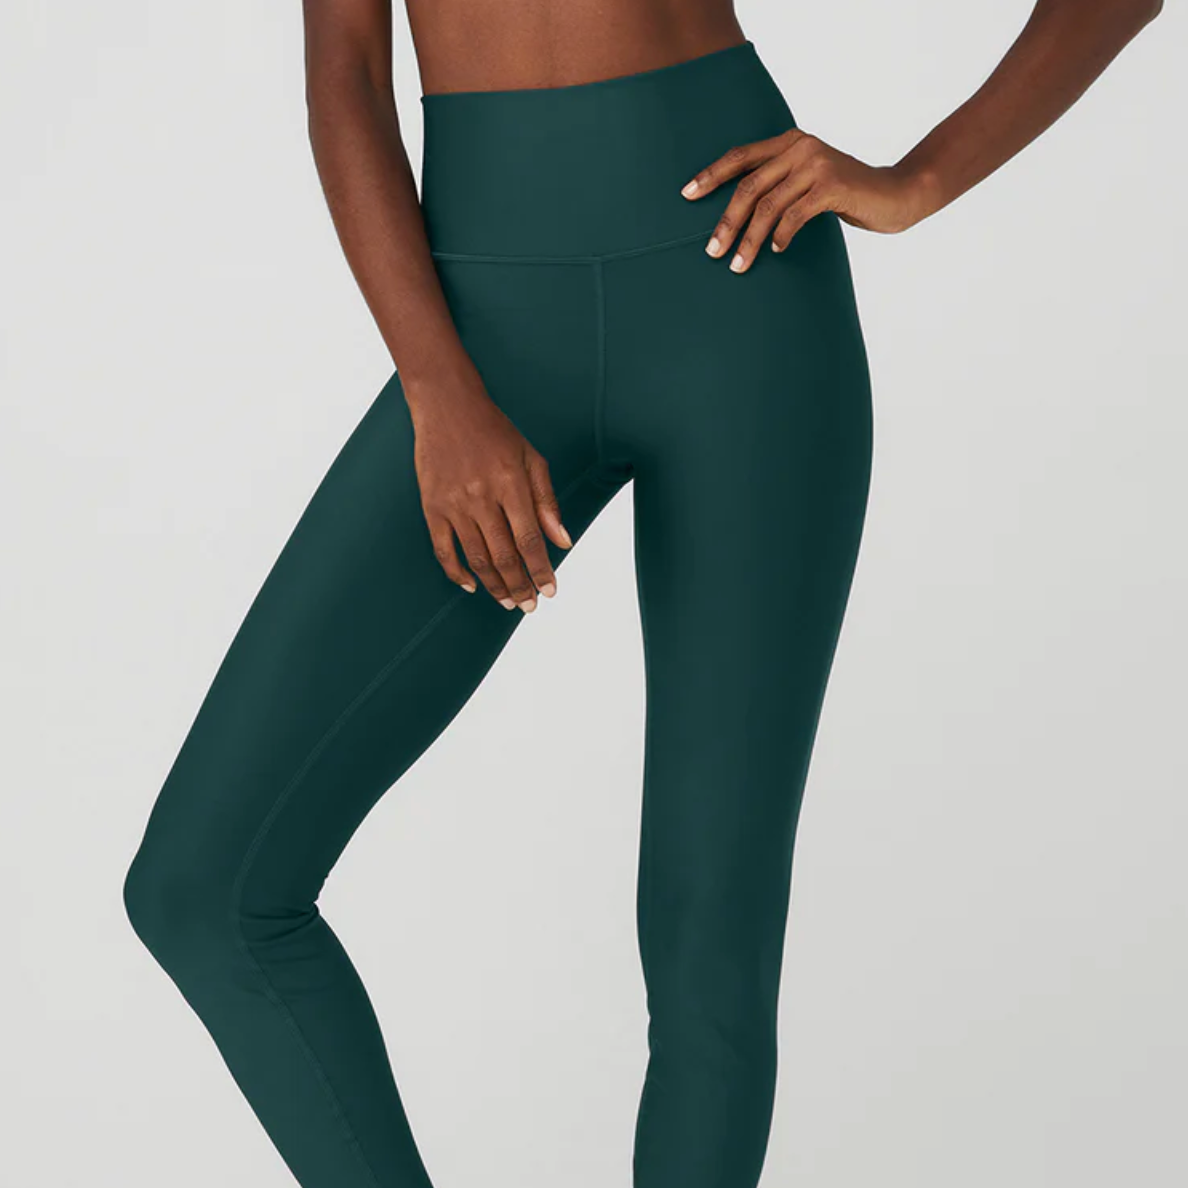 Prime Day 2022 includes sale on Alo Yoga leggings